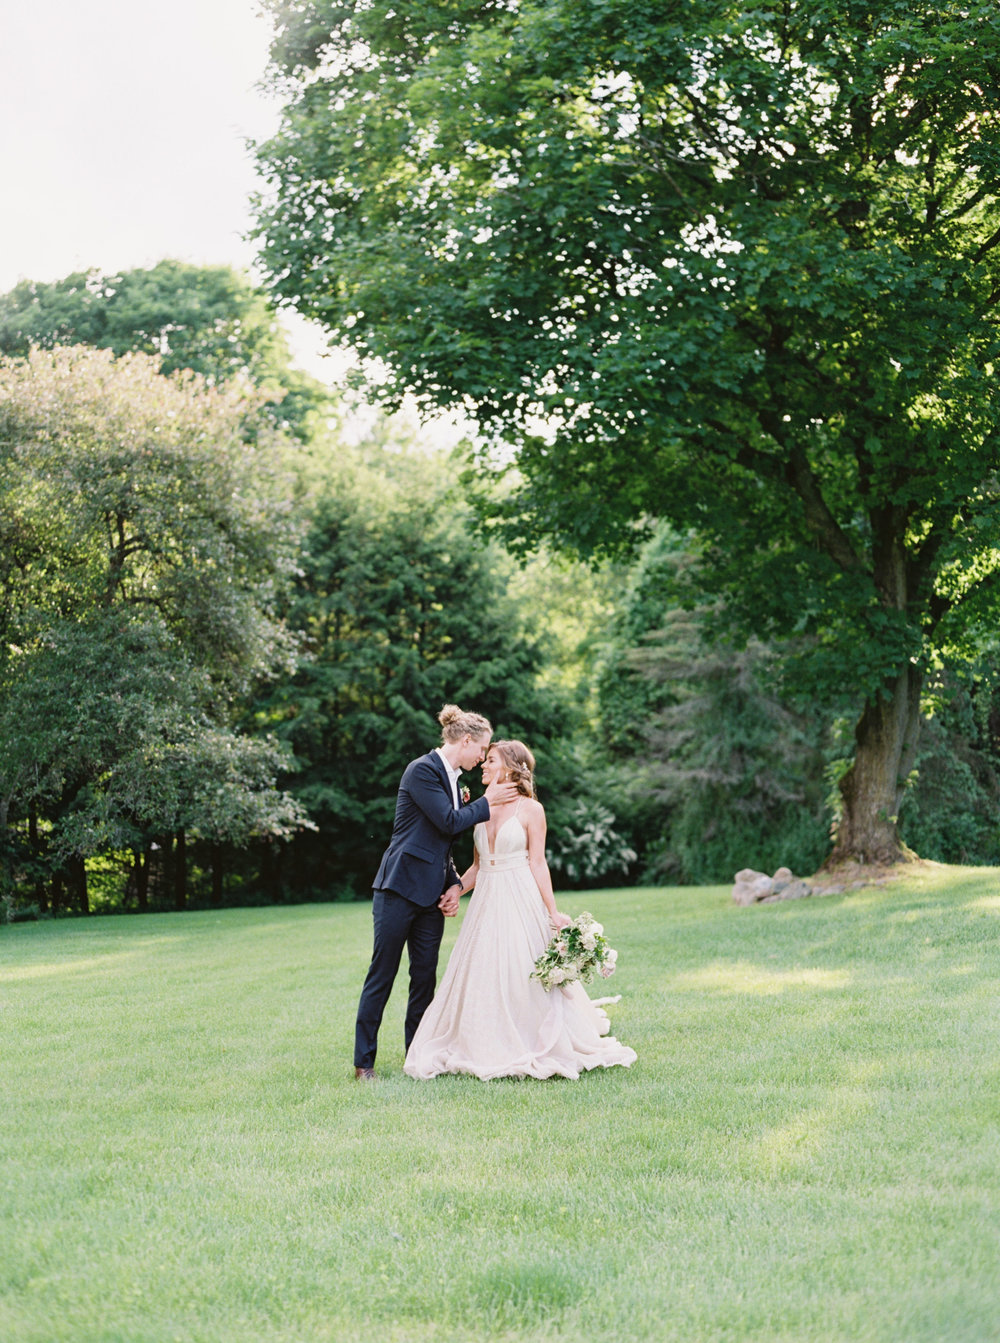 Greencrest Manor Wedding inspiration | Michigan Wedding | Best Michigan venuesGreencrest Manor Wedding inspiration | Michigan Wedding | Best Michigan venues